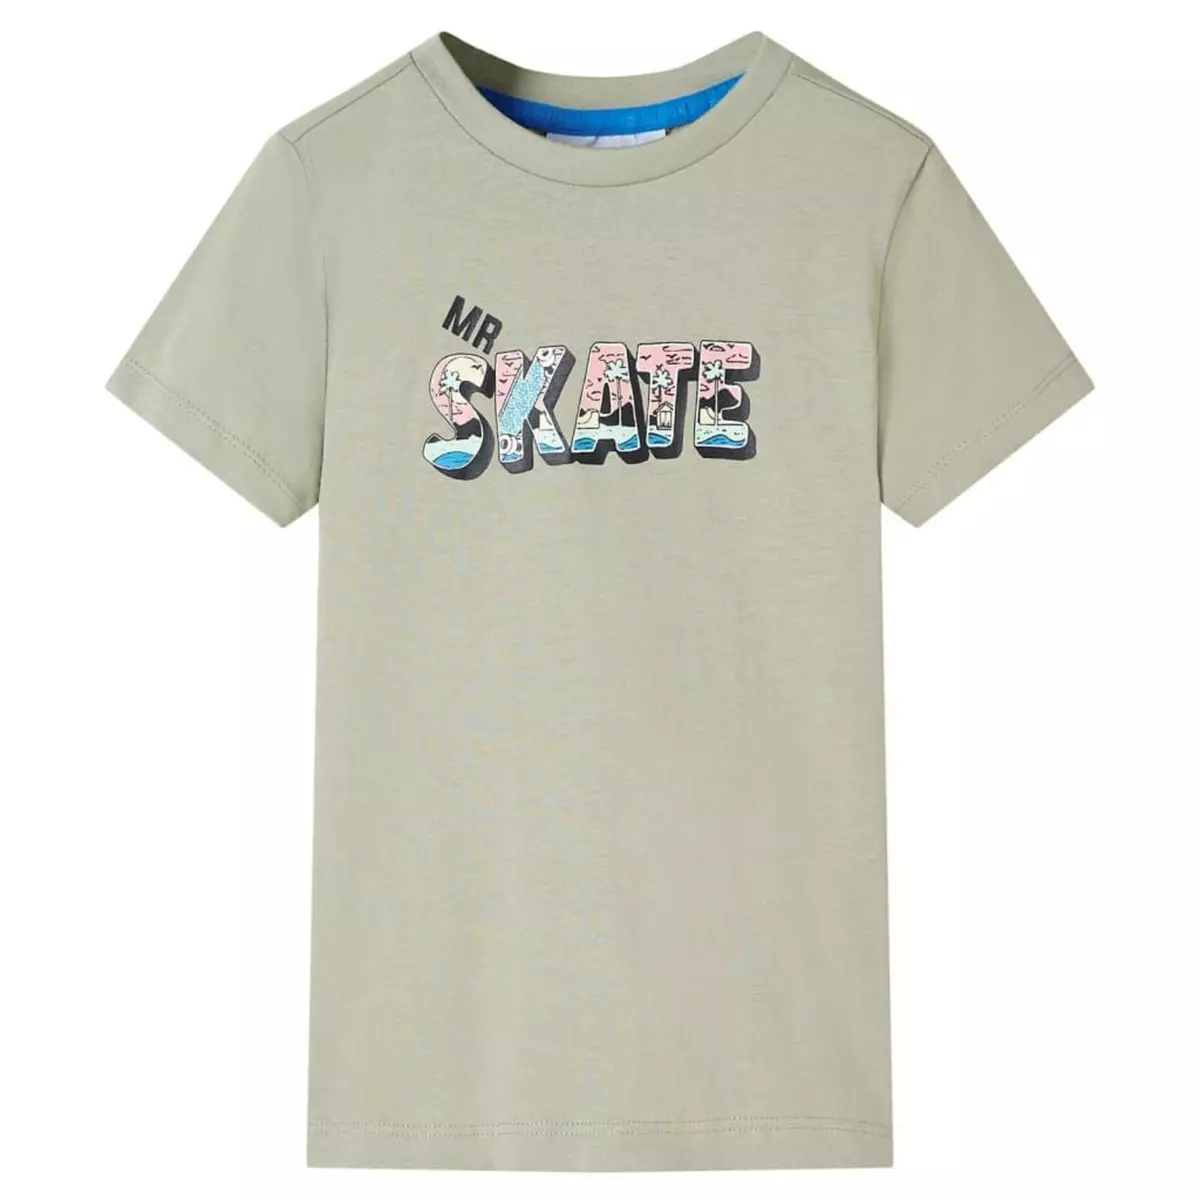 VIDAXL T-shirt pour enfants kaki clair 92